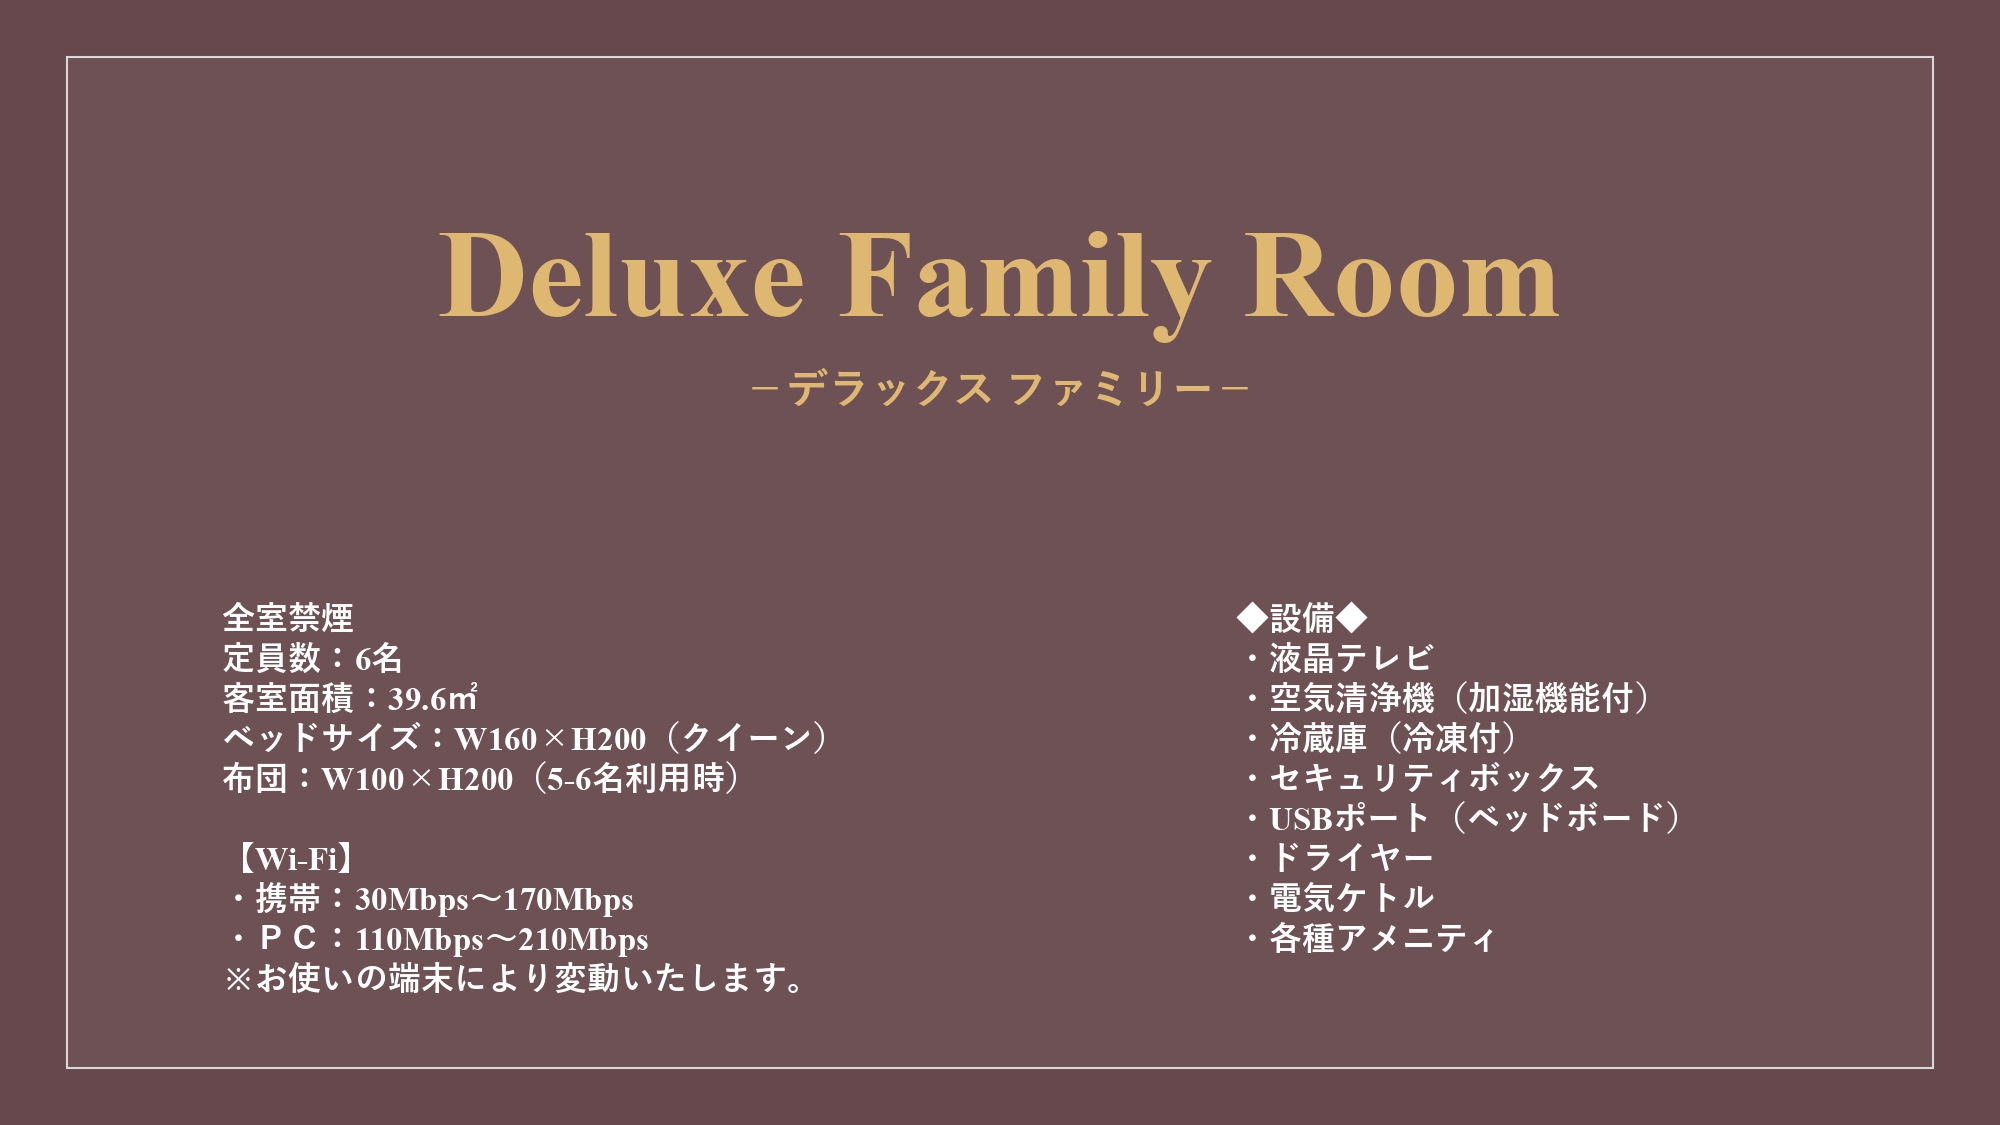 Deluxe Family Room